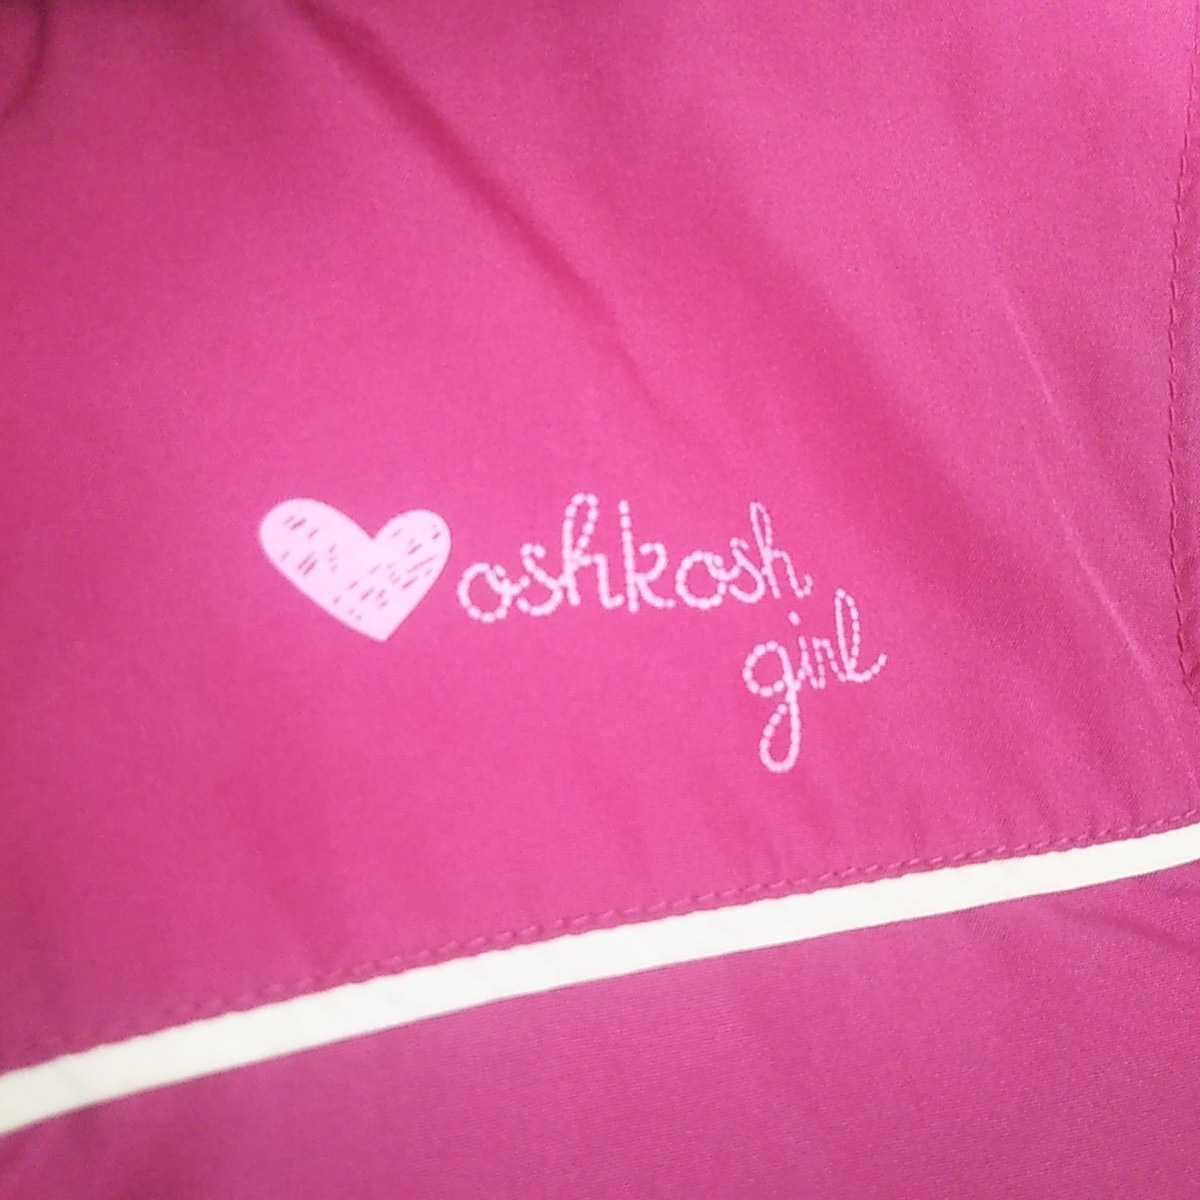  Oshkosh oshkosh girl together 110 jumper bottoms set pink trousers woman . Point long sleeve long trousers kindergarten child care .